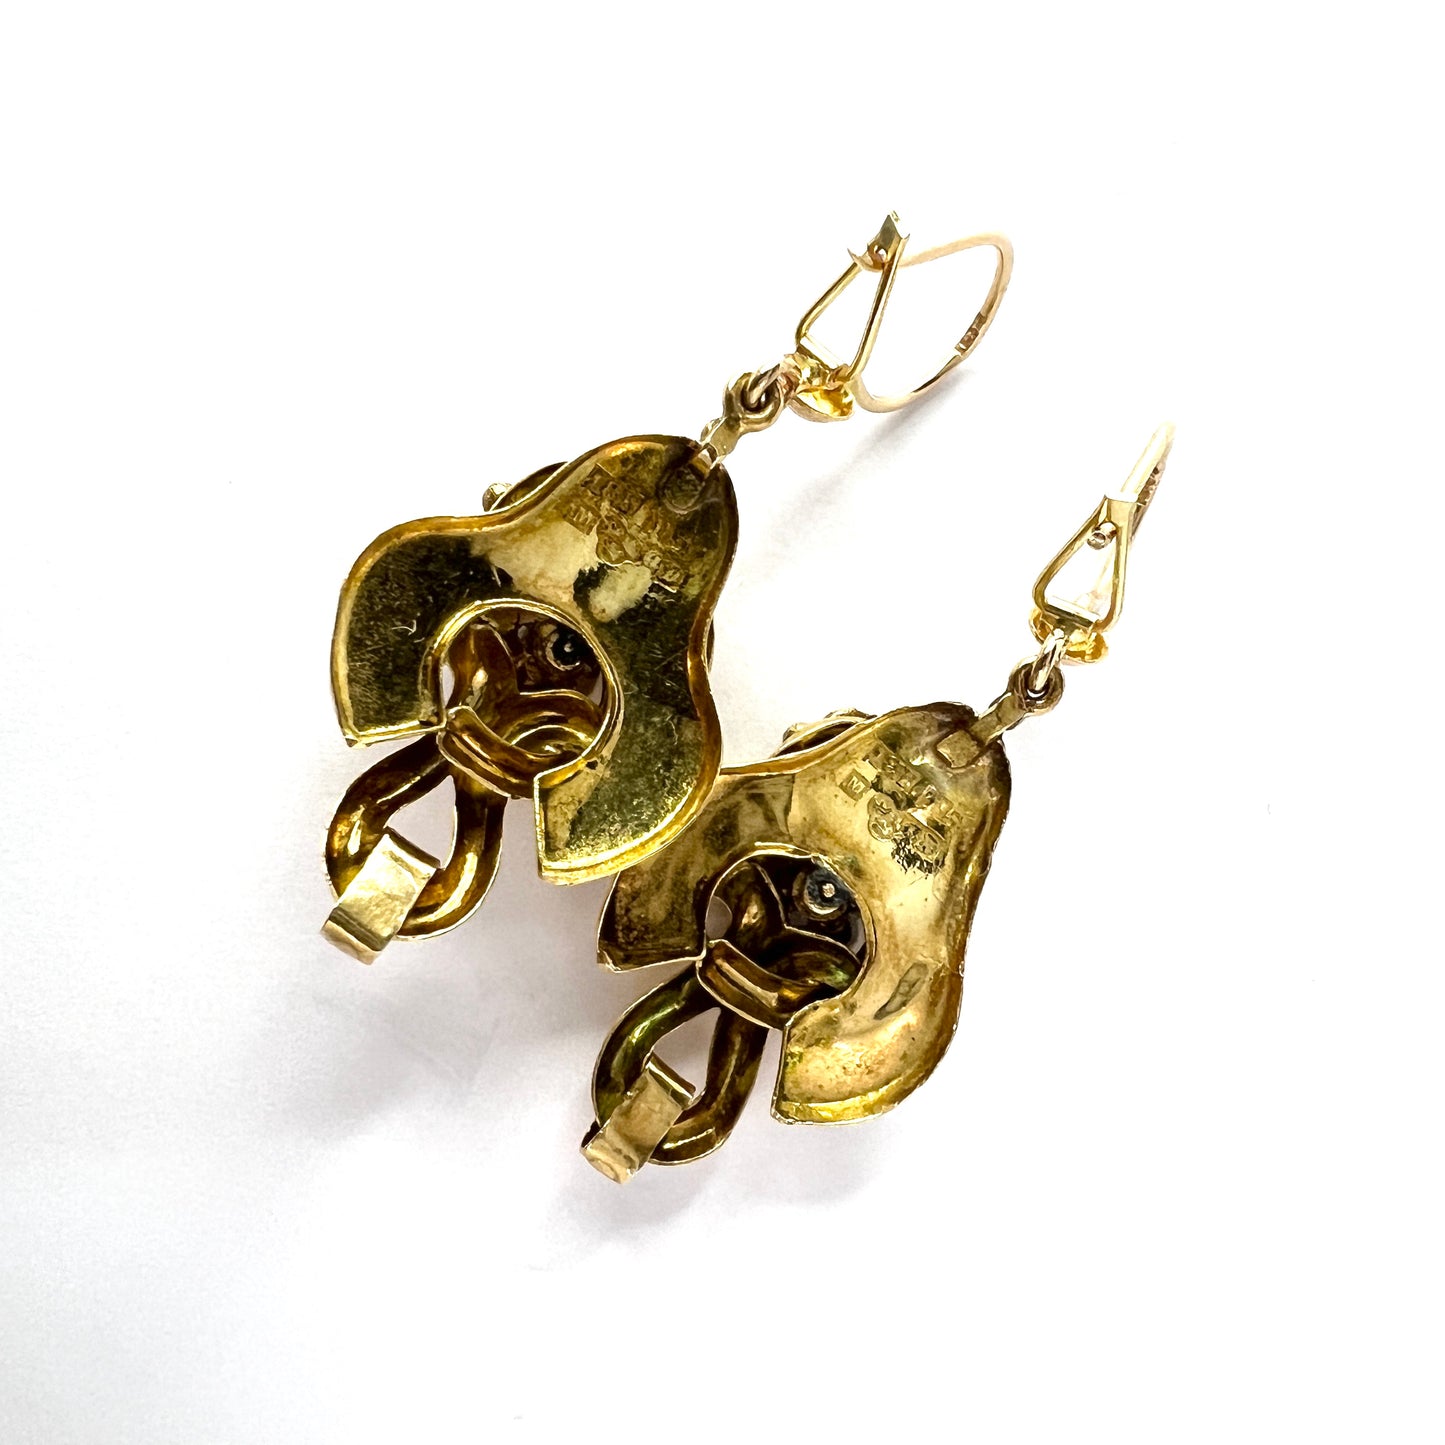 G Dahlgren, Sweden 1873. Antique Victorian 18k Gold Earrings.